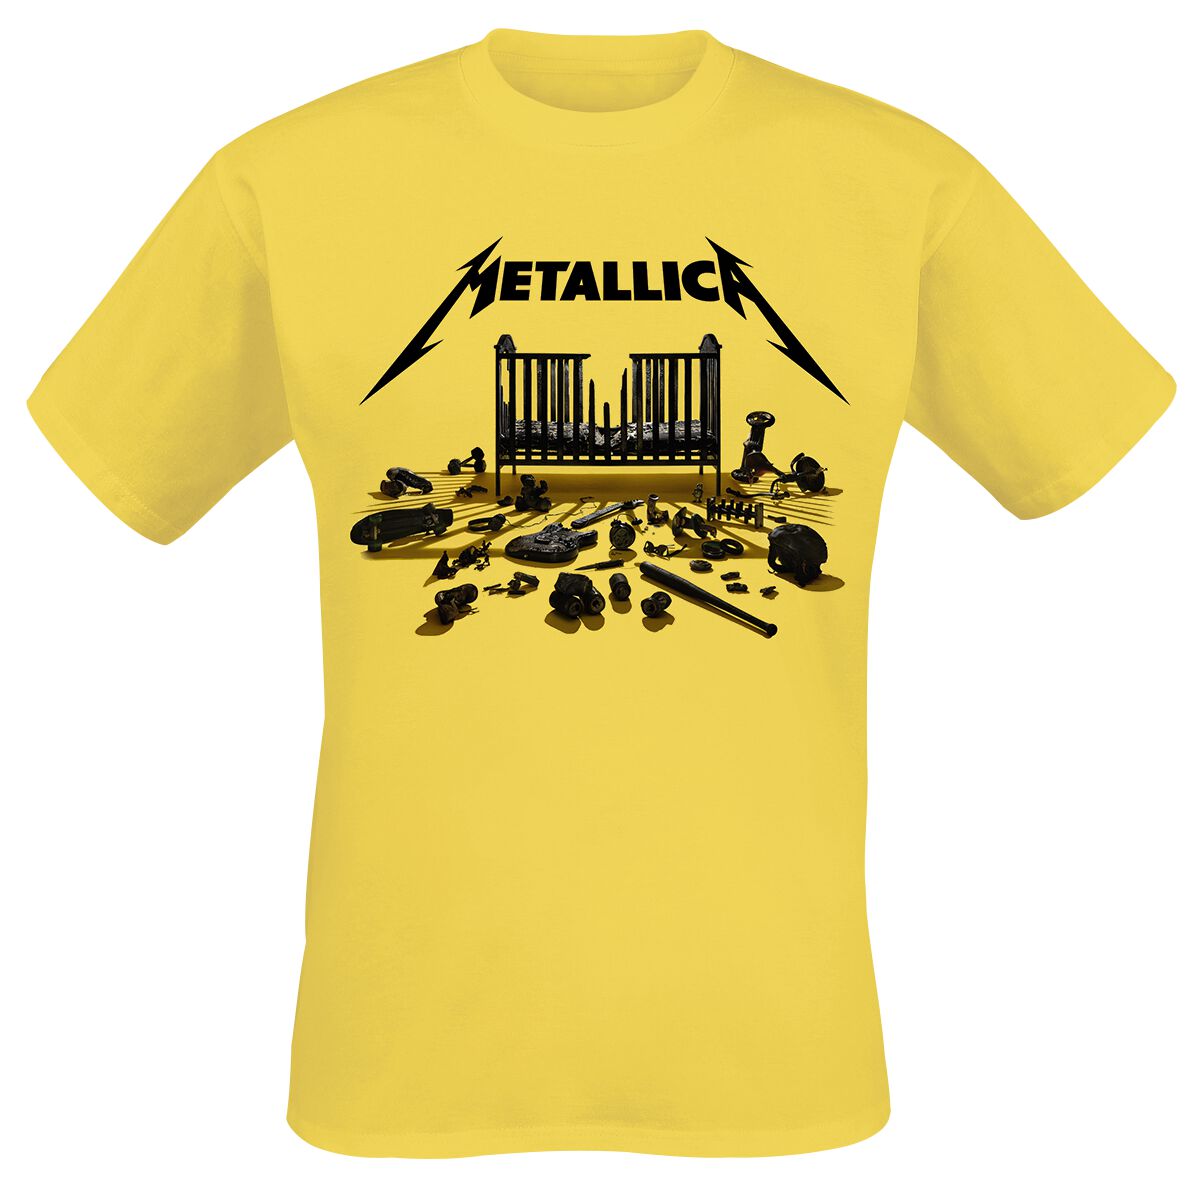 Metallica Simplified Cover (M72) T-Shirt gelb in M